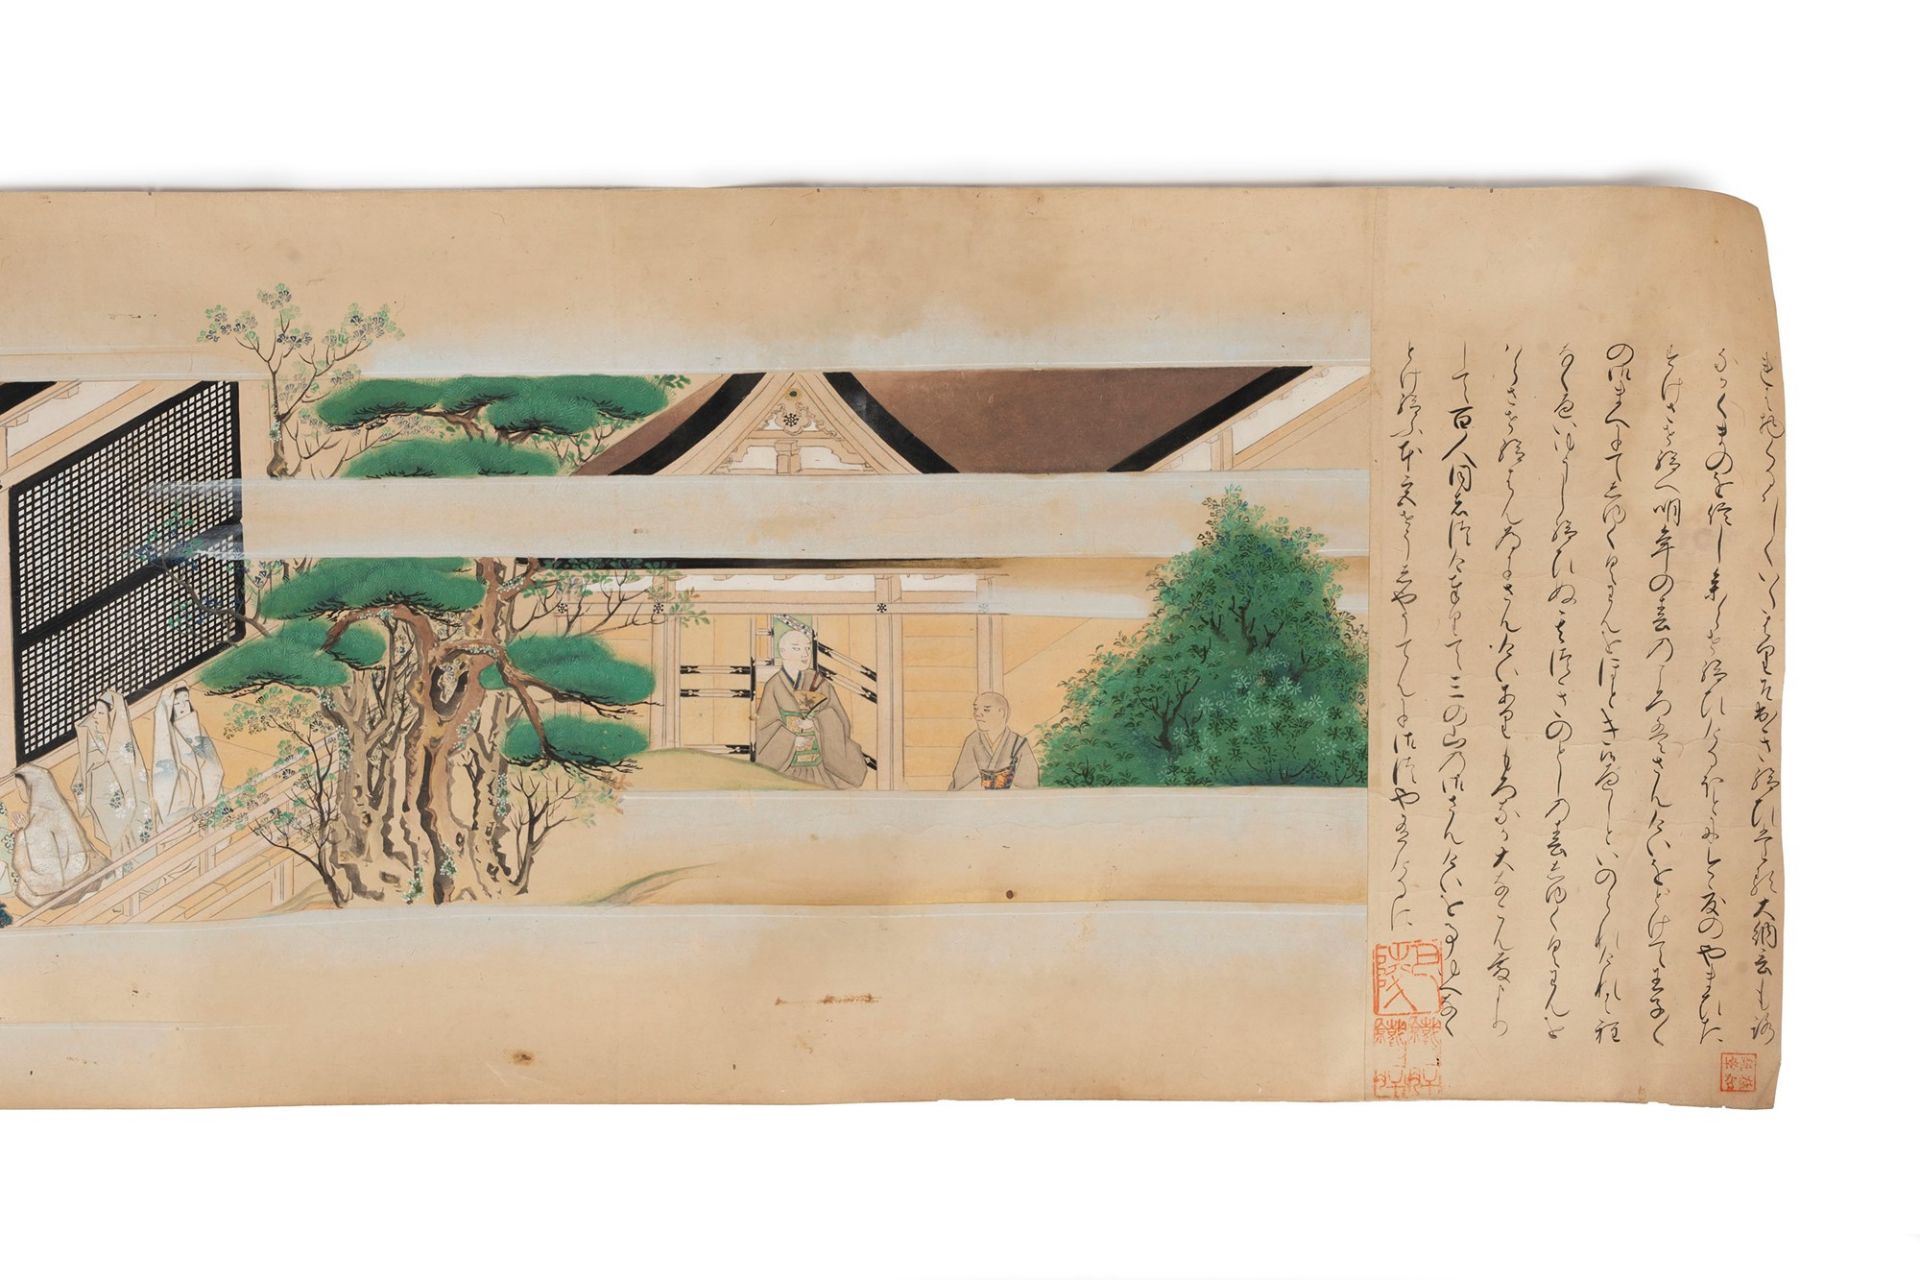 Emakimono painted on paper representing a ritual scene in a temple, Japan Edo period